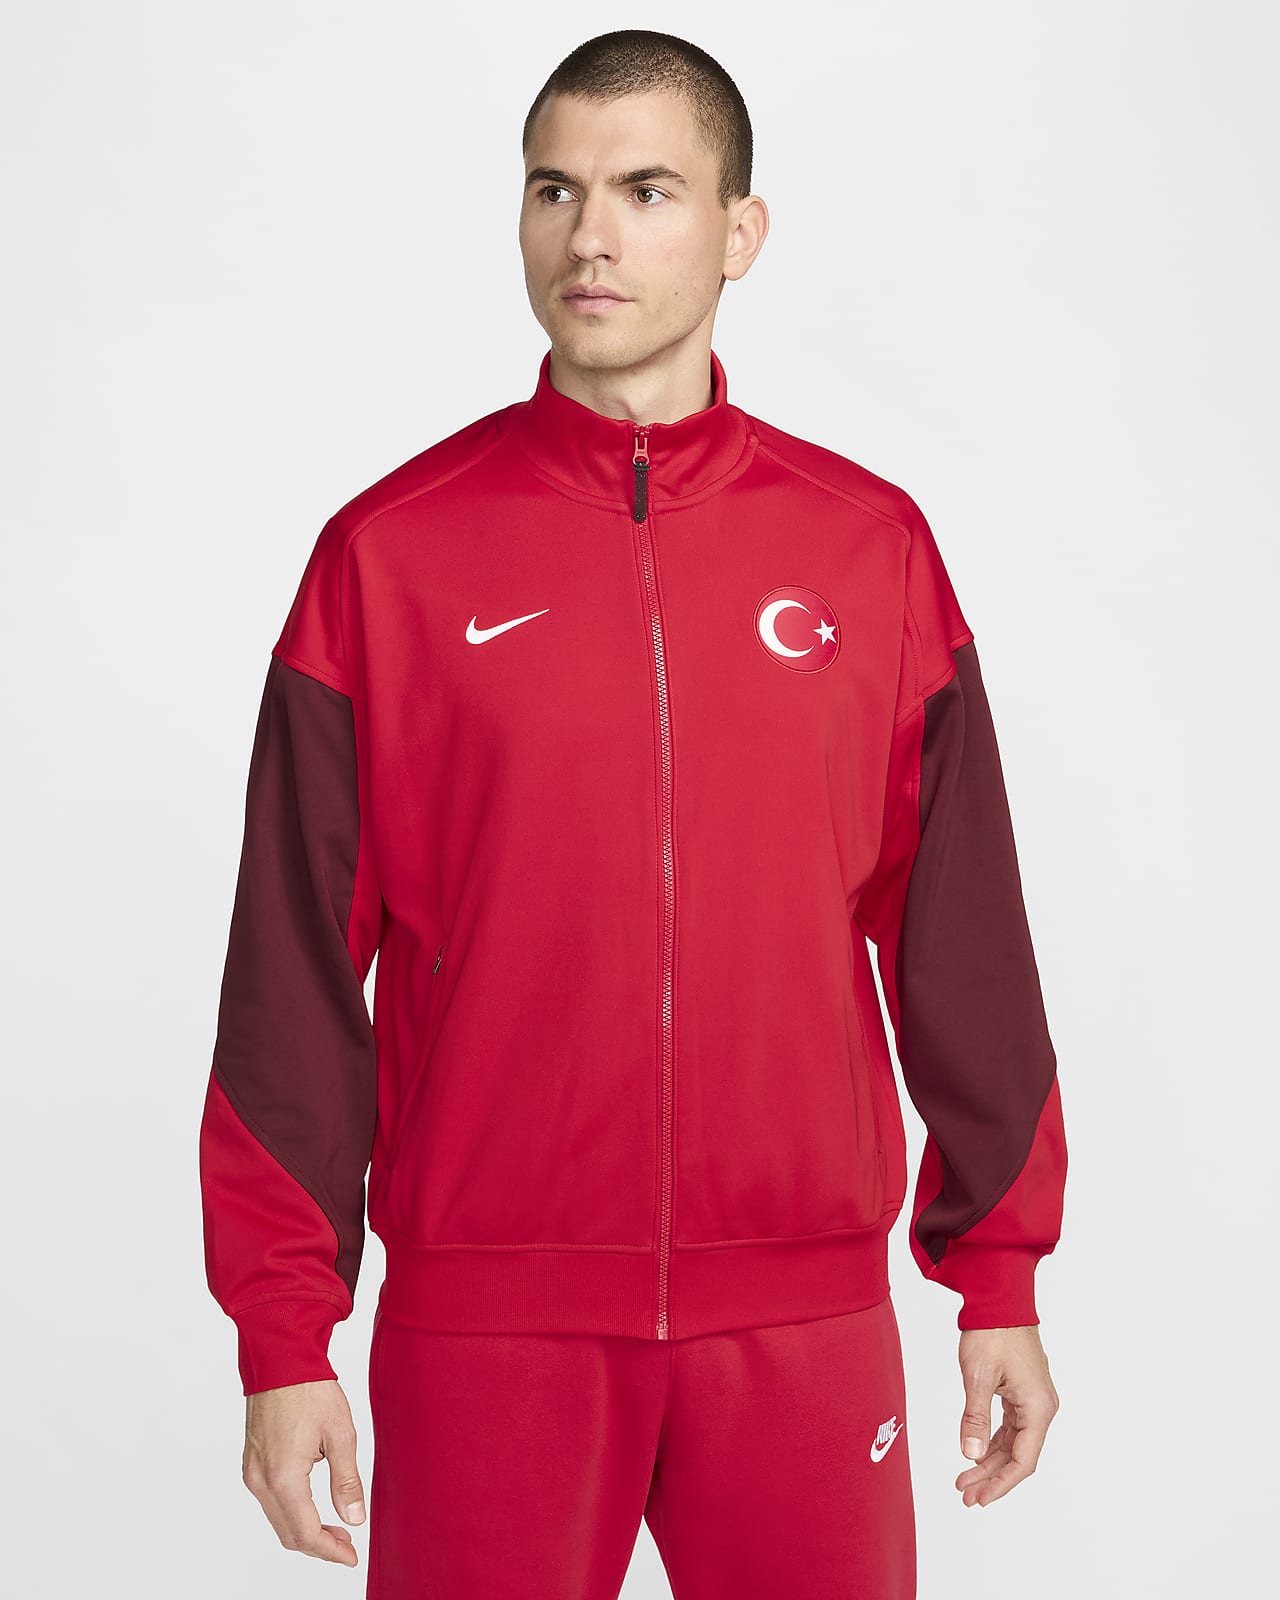 Türkiye Academy Pro Men's Nike Football Jacket